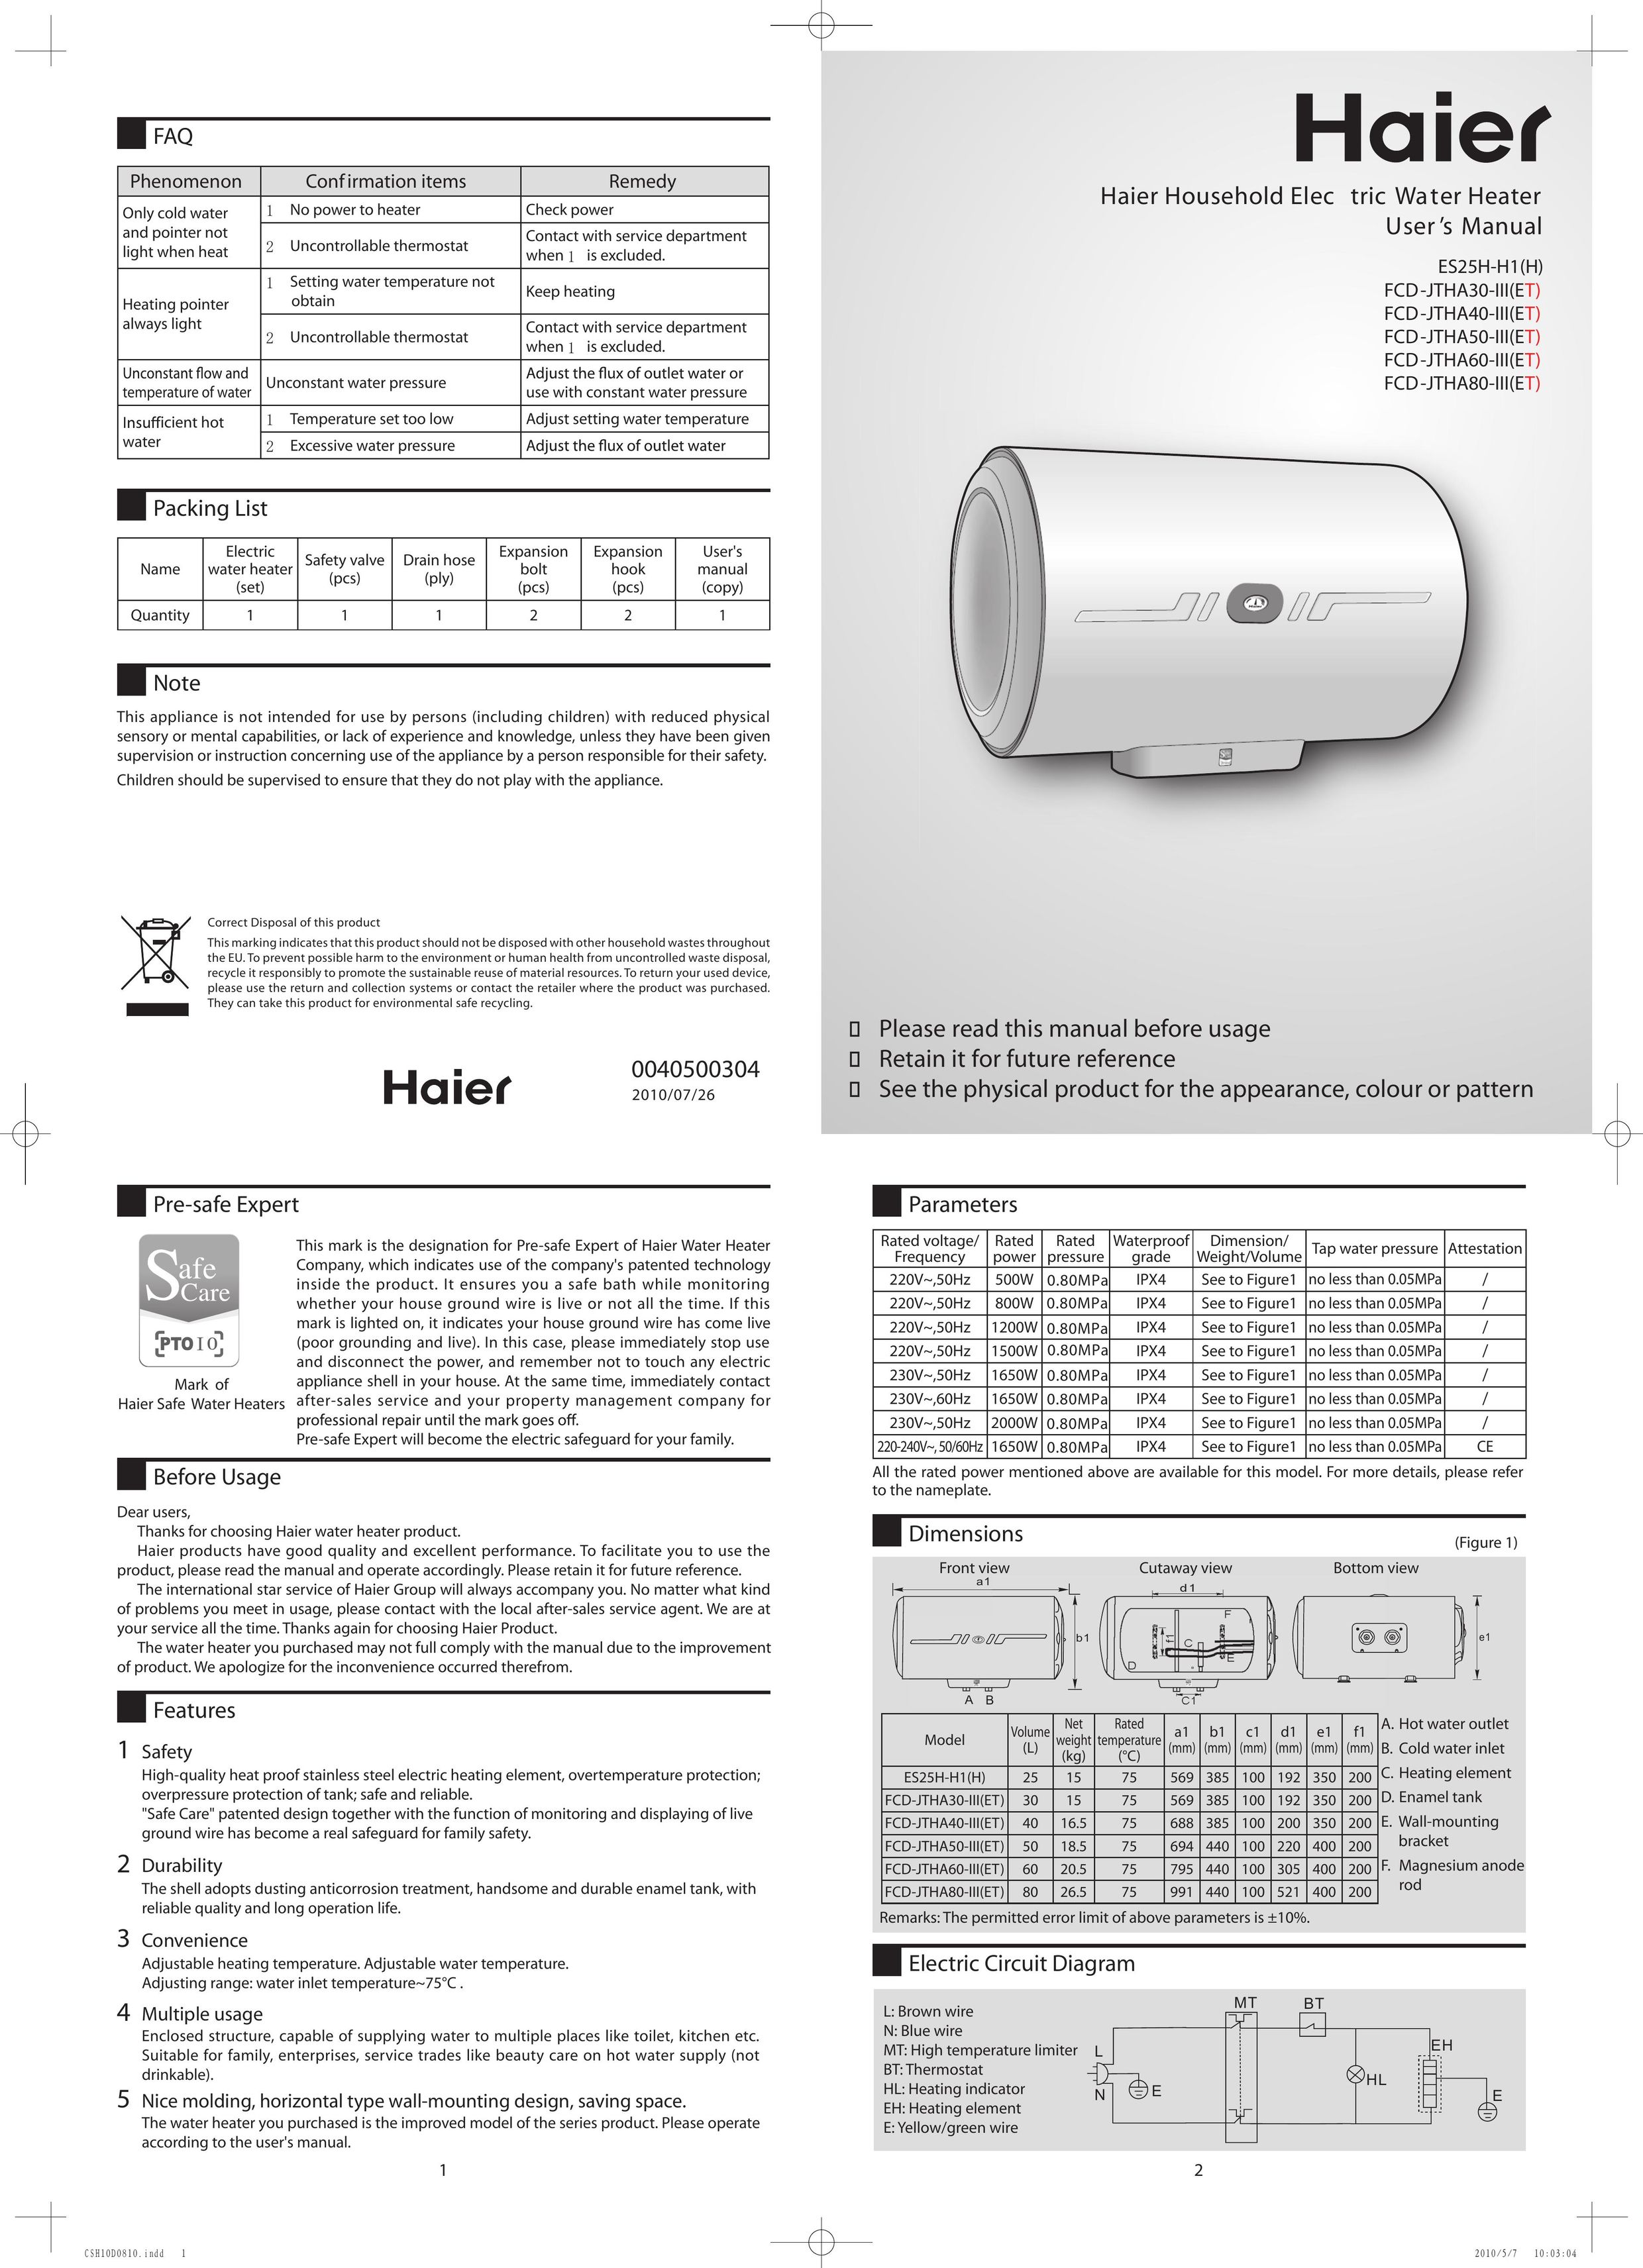 Haier ES25H-H1(H) Water Heater User Manual